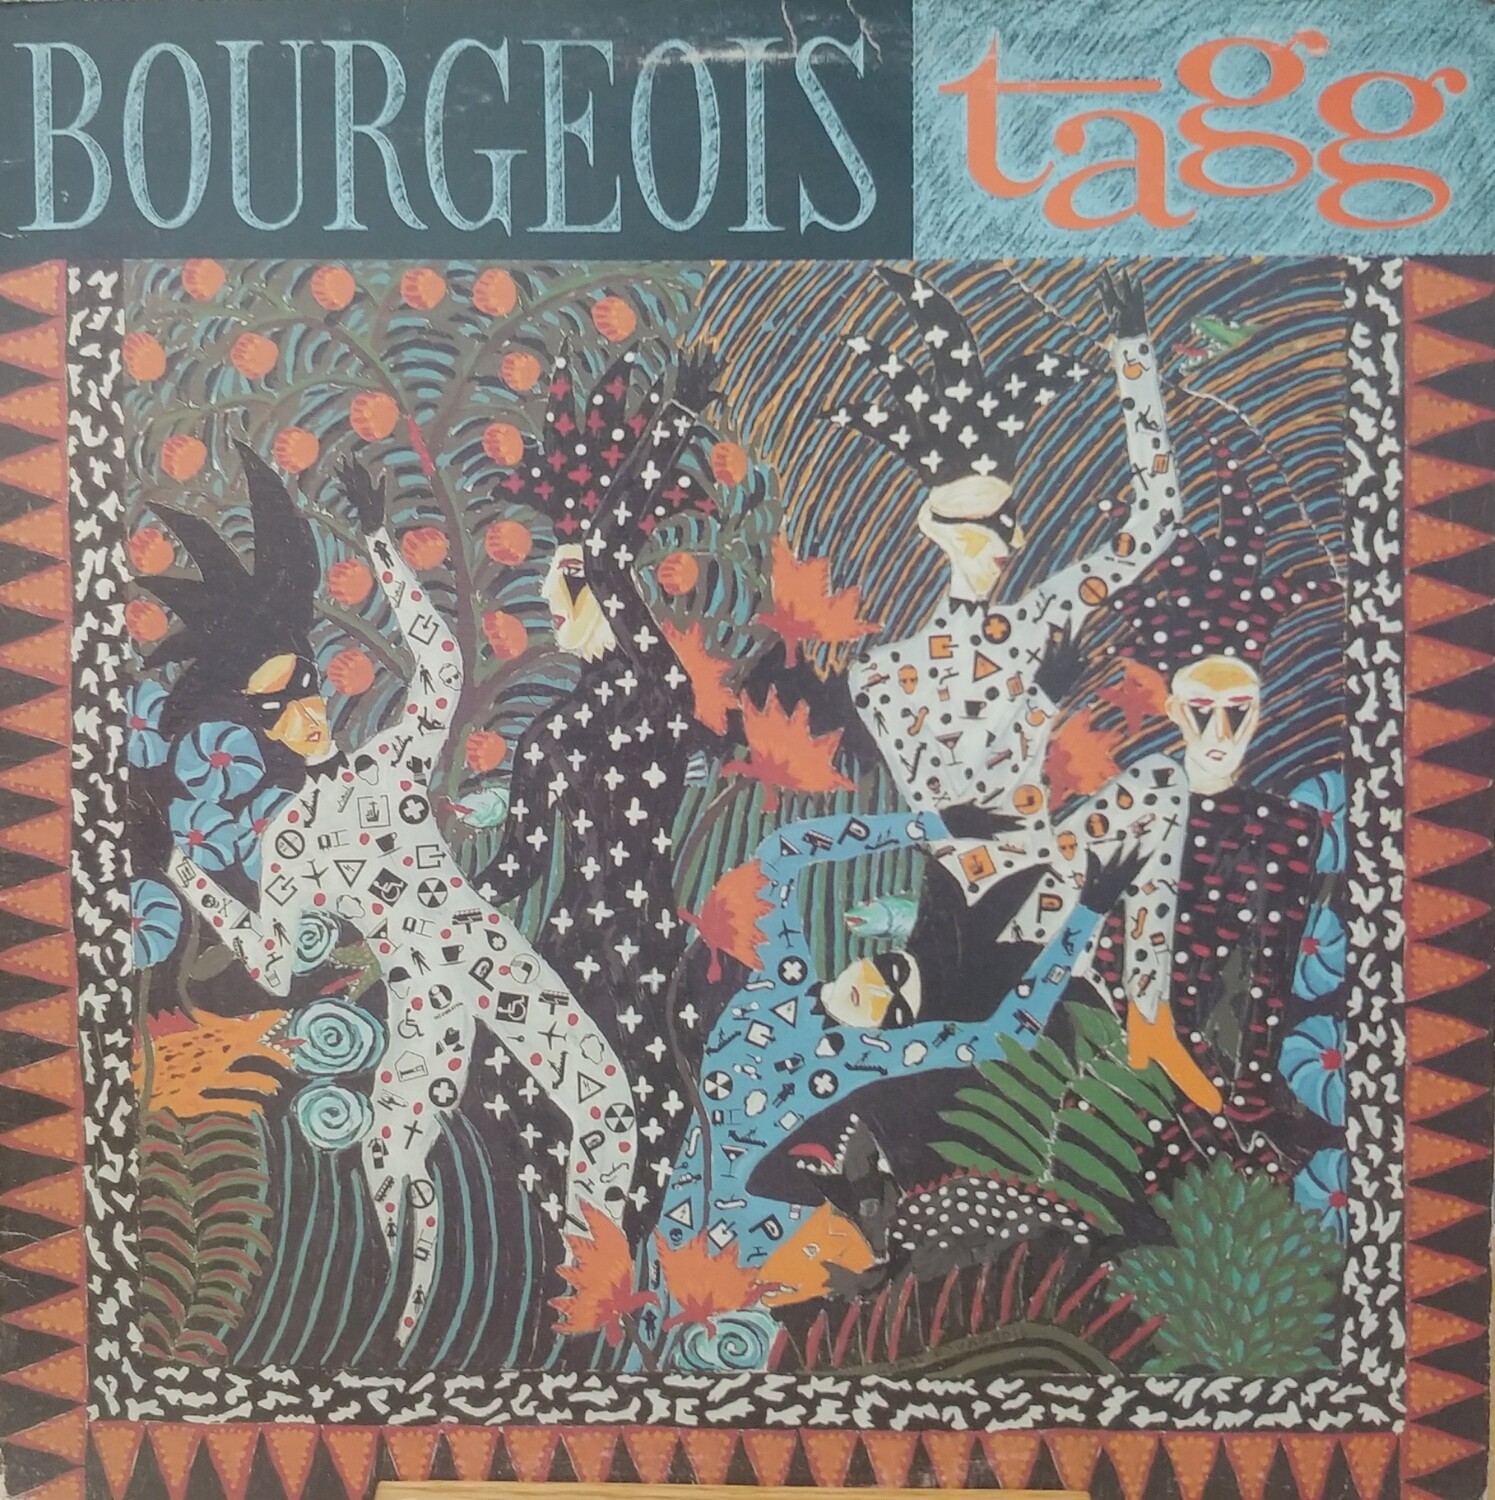 Bourgeois Tagg - Bourgeois Tagg